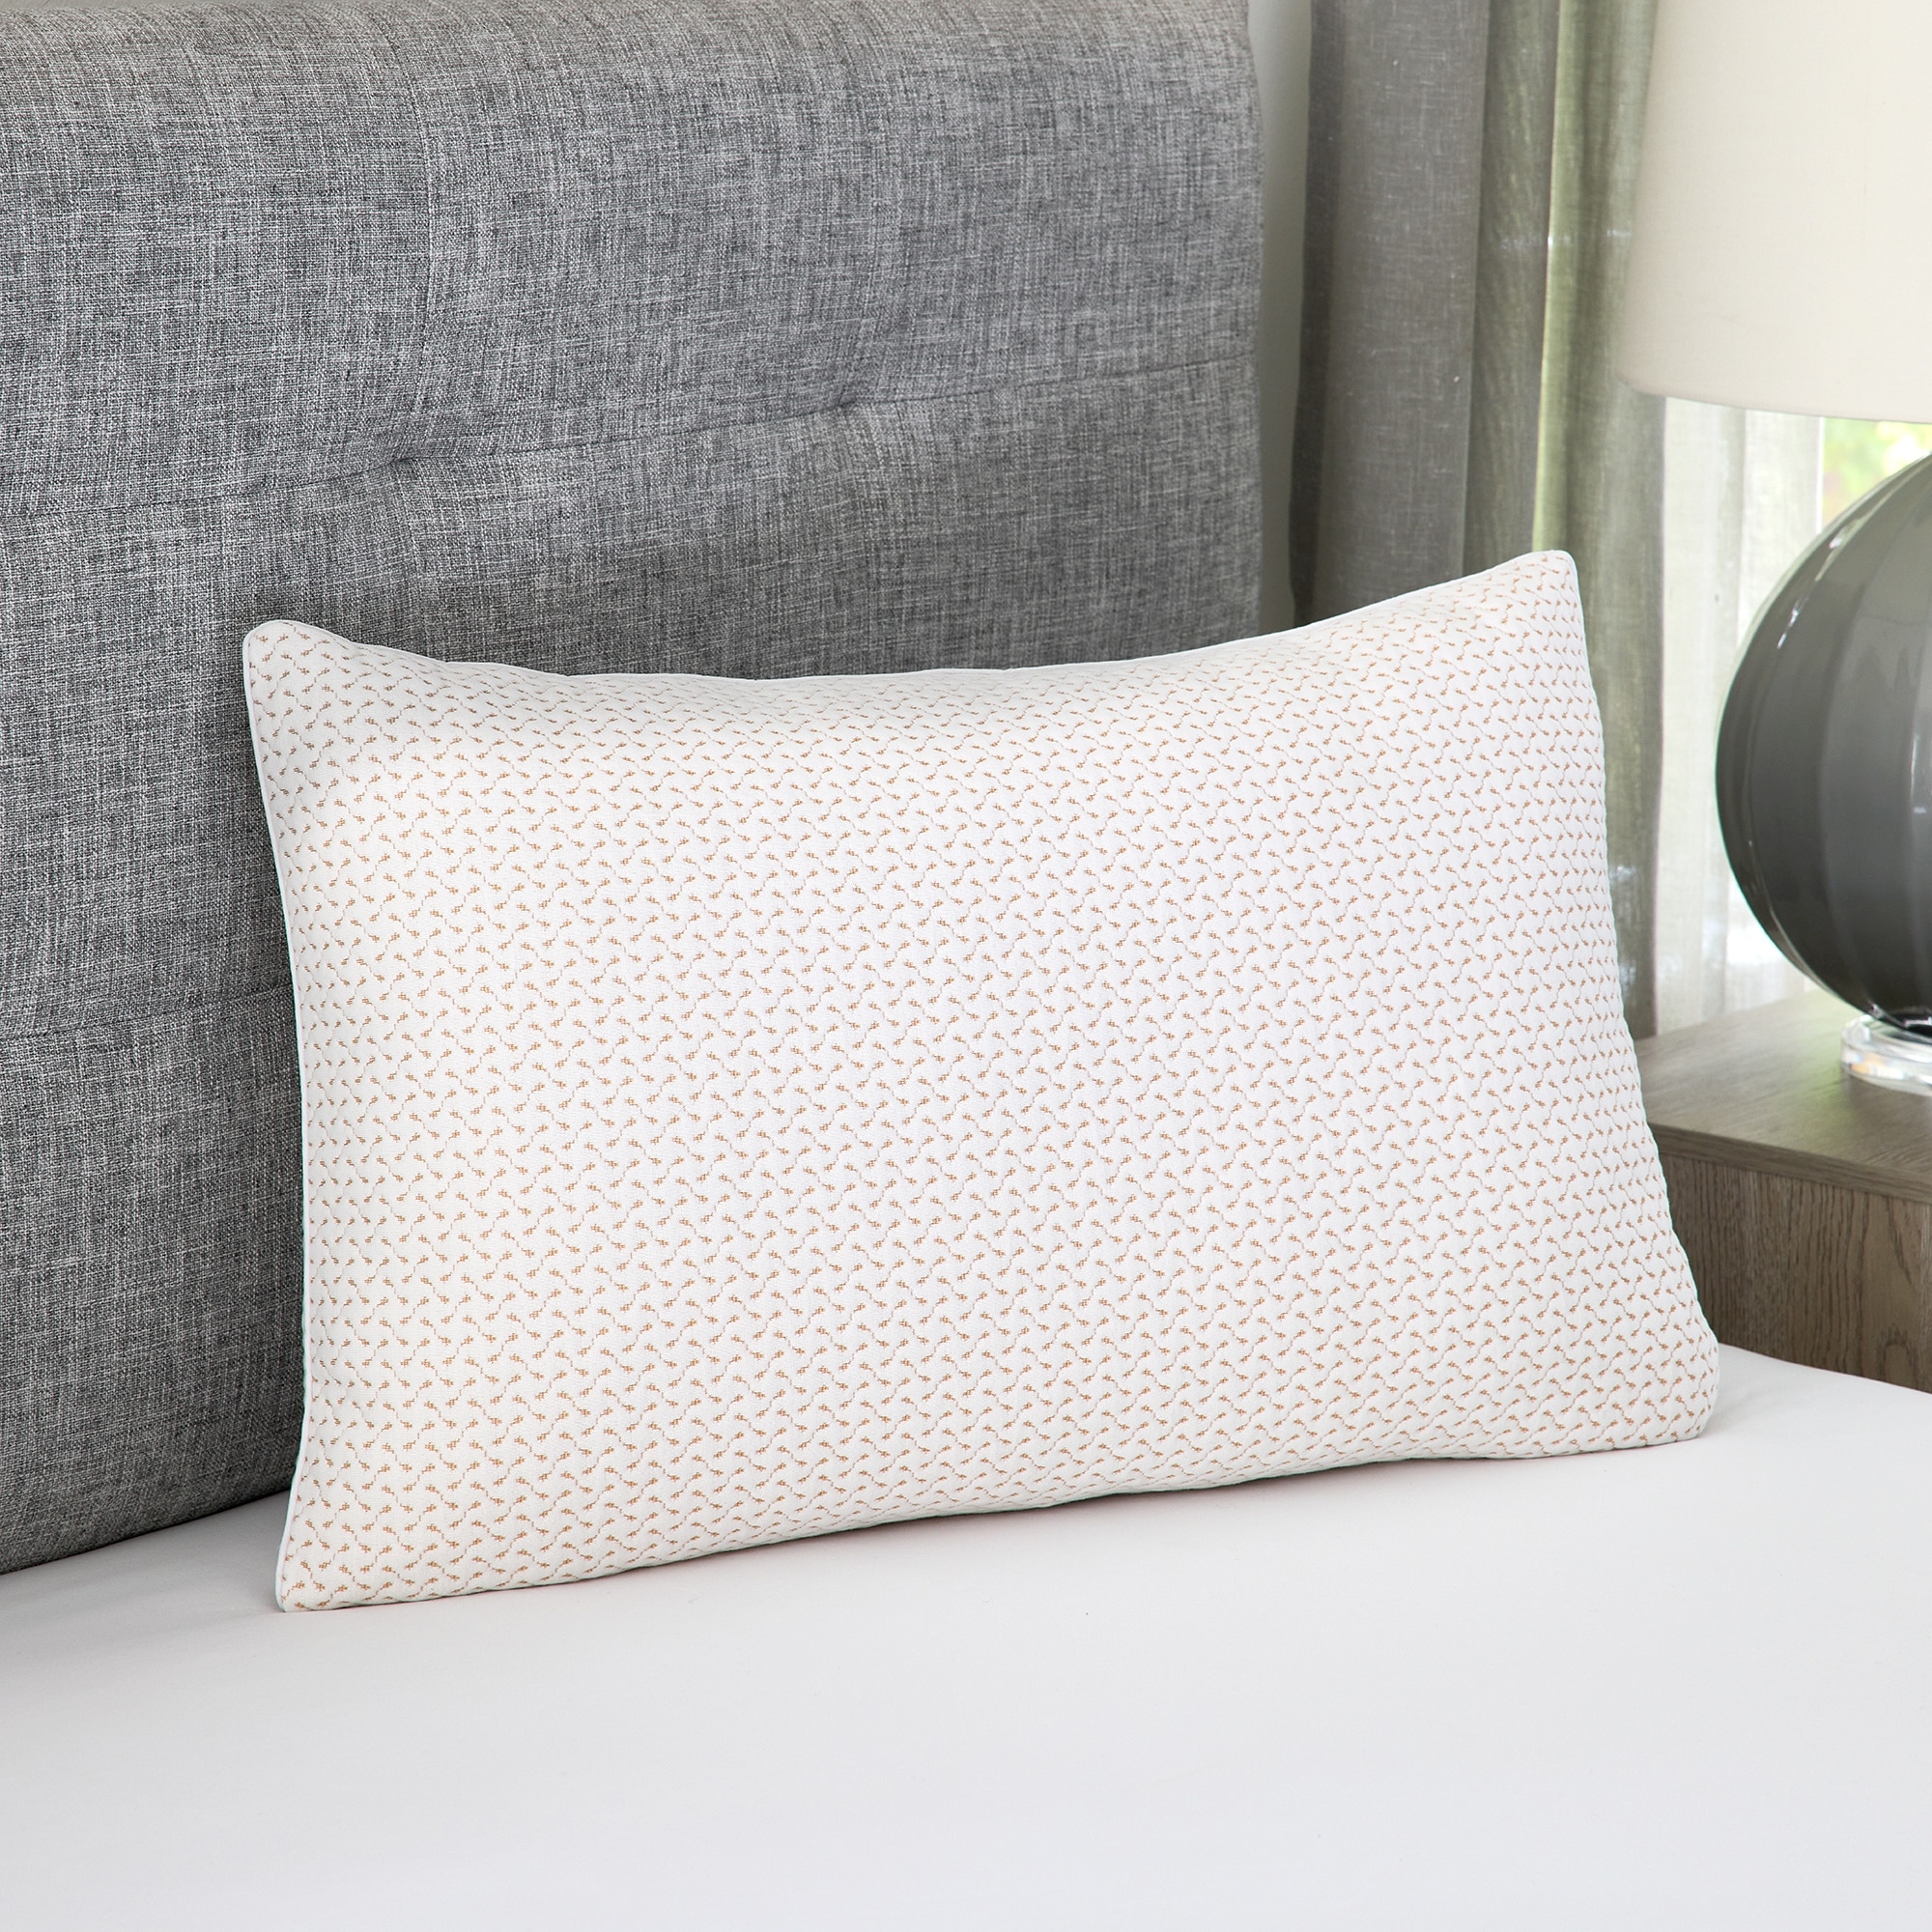 Medium-Firm, Single, Memory Foam Bed Pillows - Bed Bath & Beyond